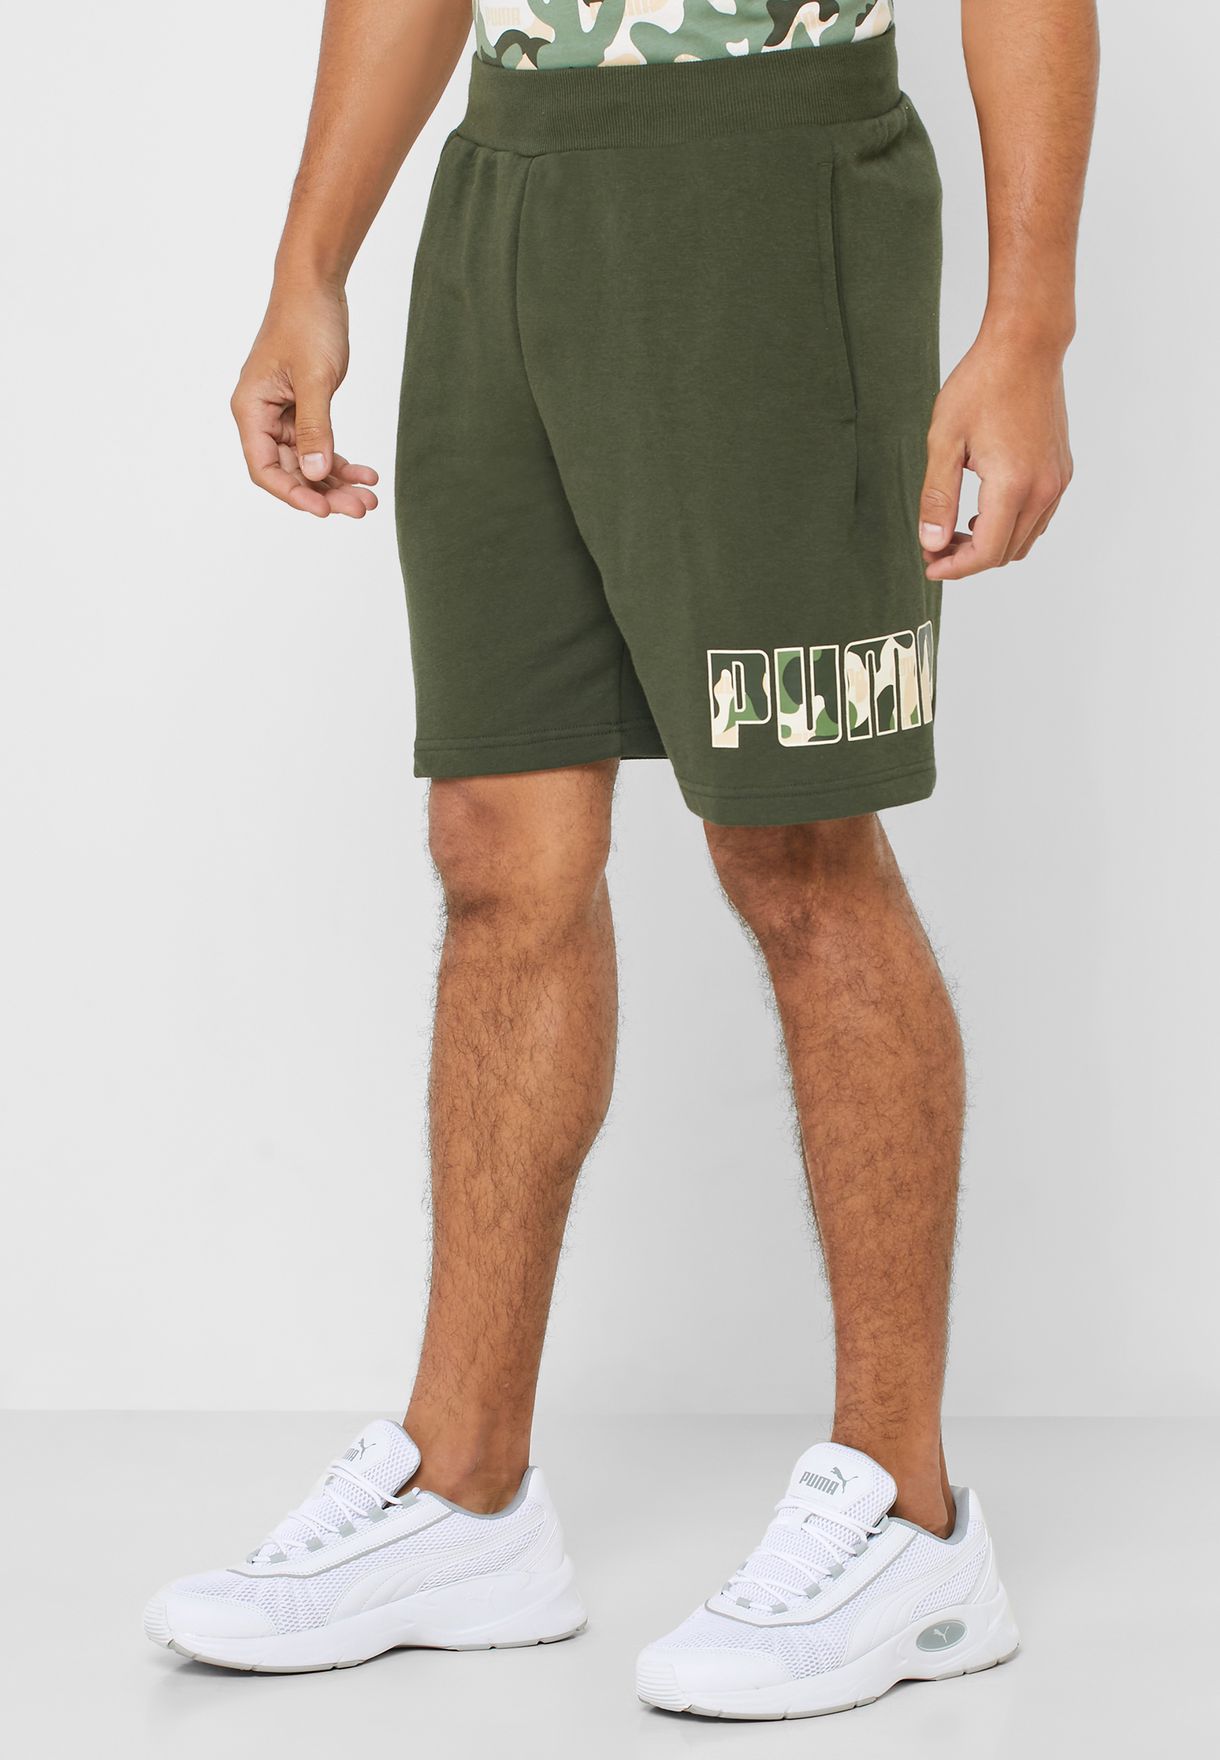 puma camo shorts